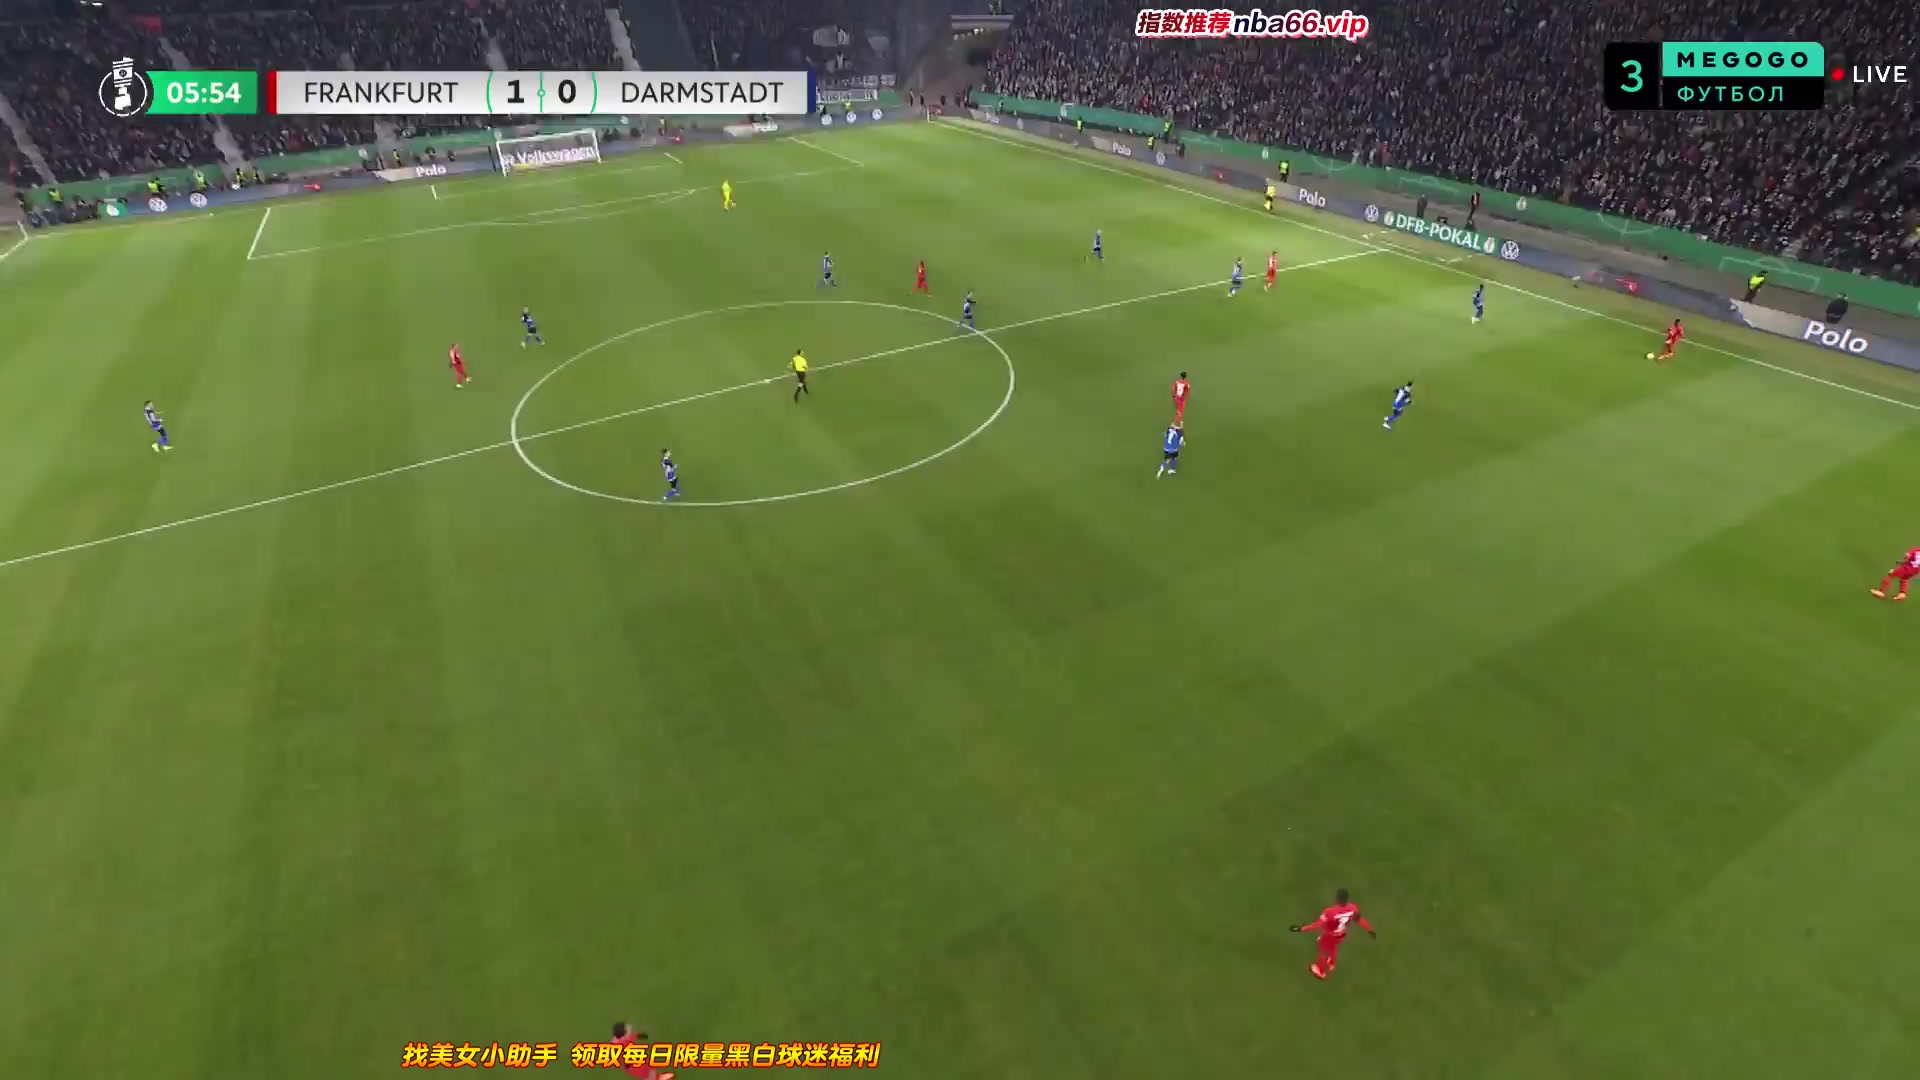 GERC Eintracht Frankfurt Vs Darmstadt  Goal in 5 min, Score 1:0